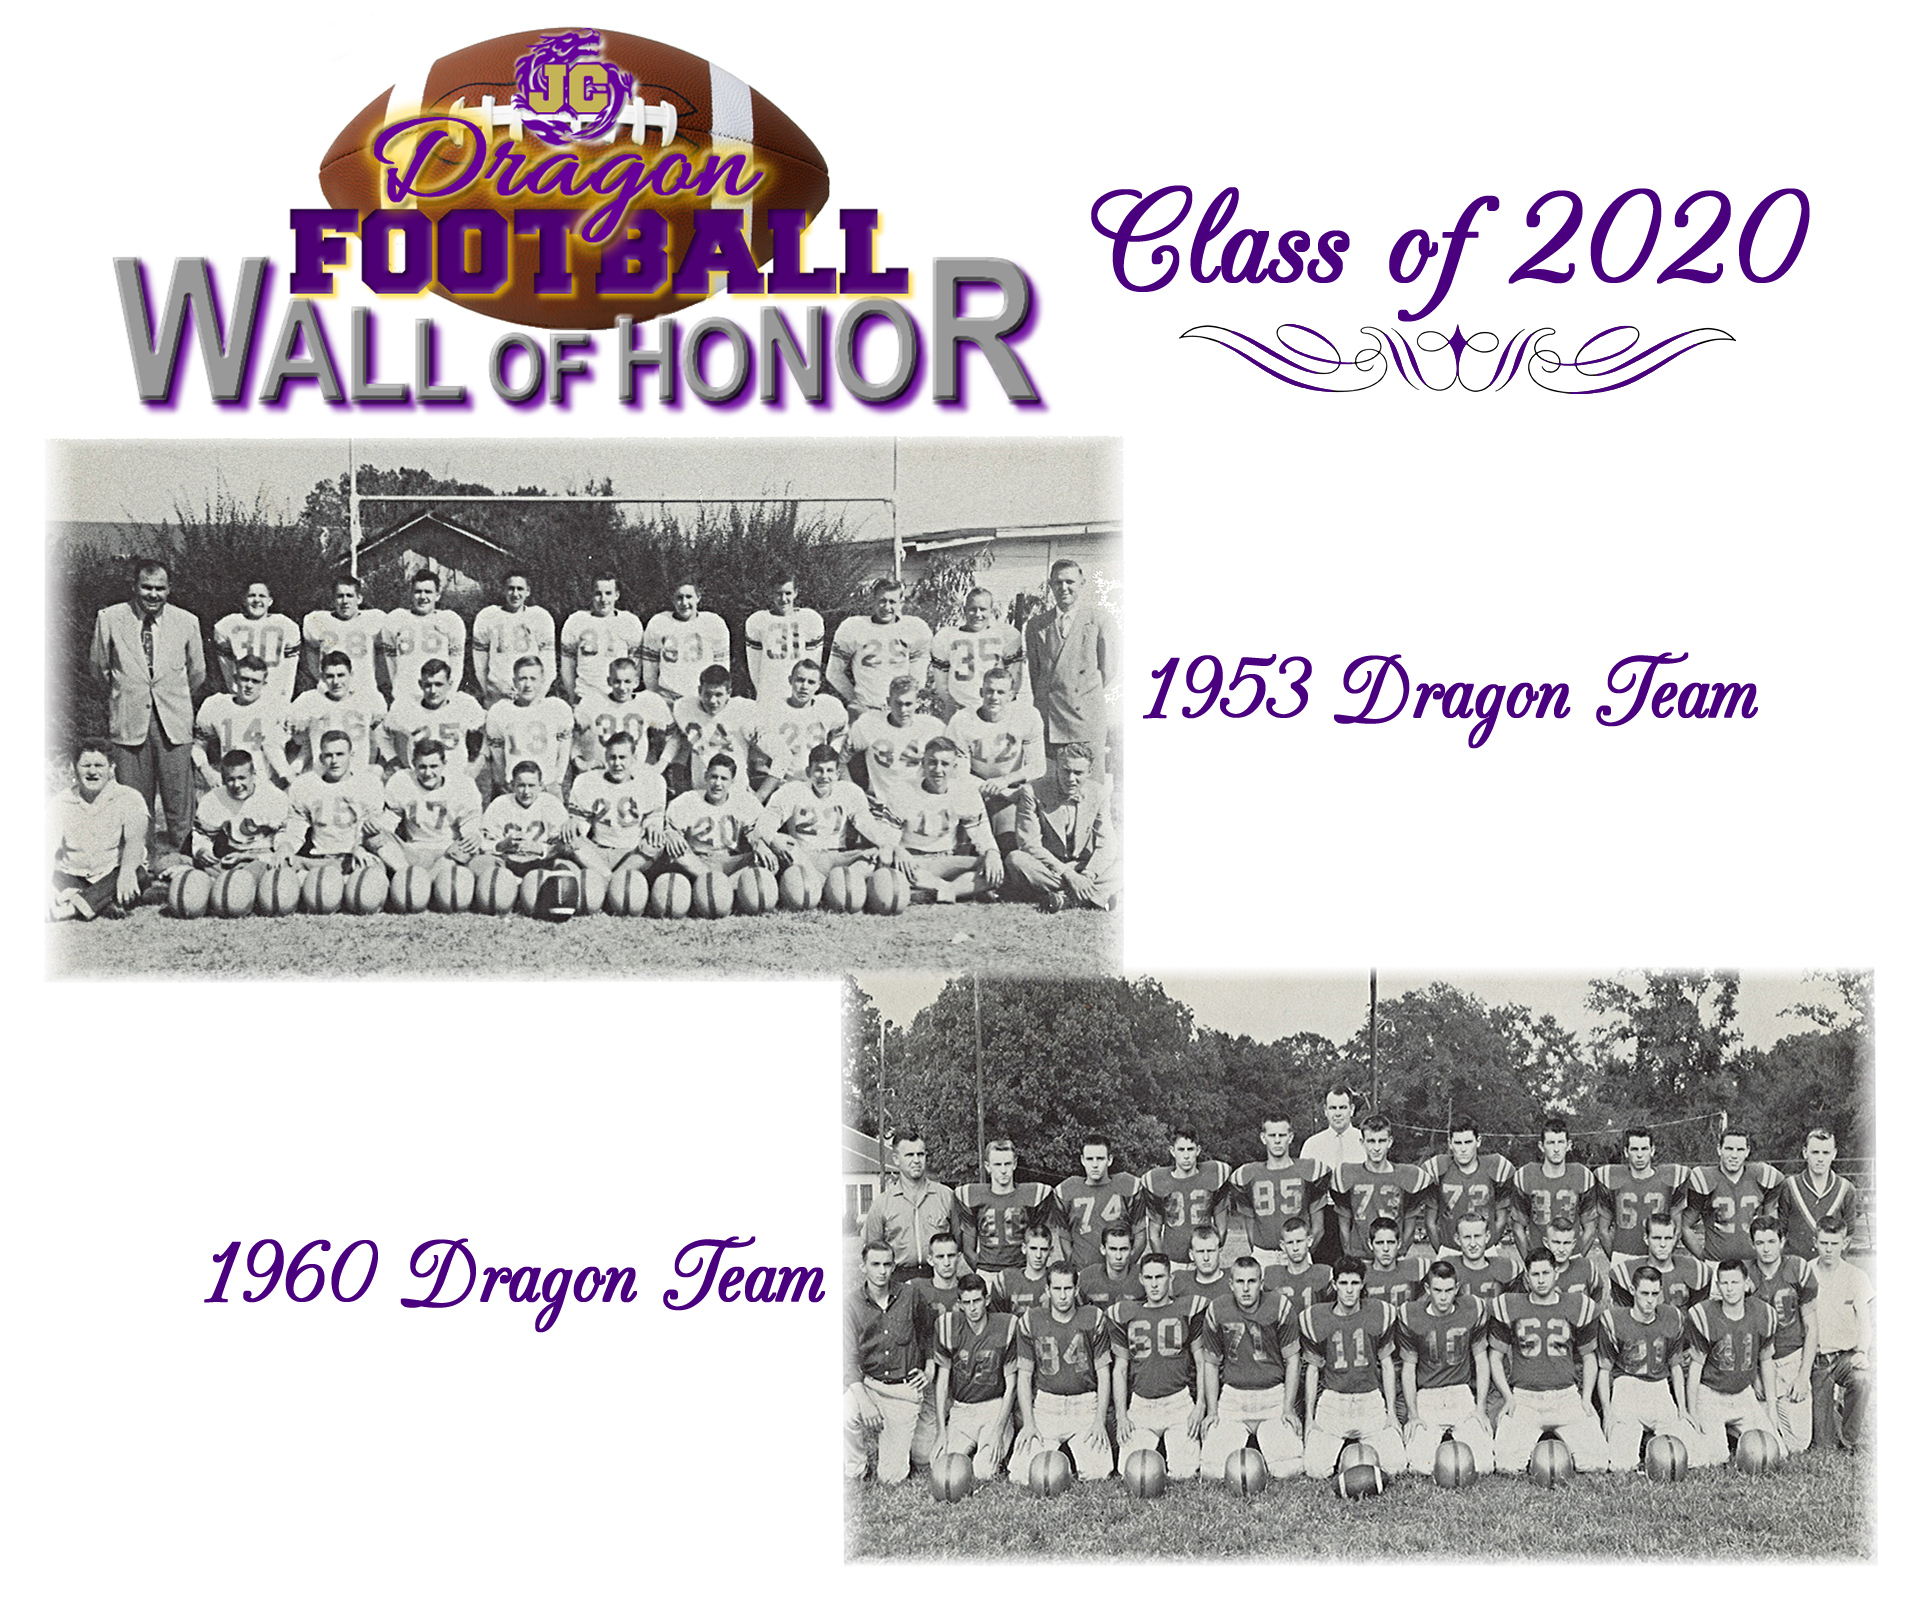 1953 Dragon Team and the 1960 Dragon Team